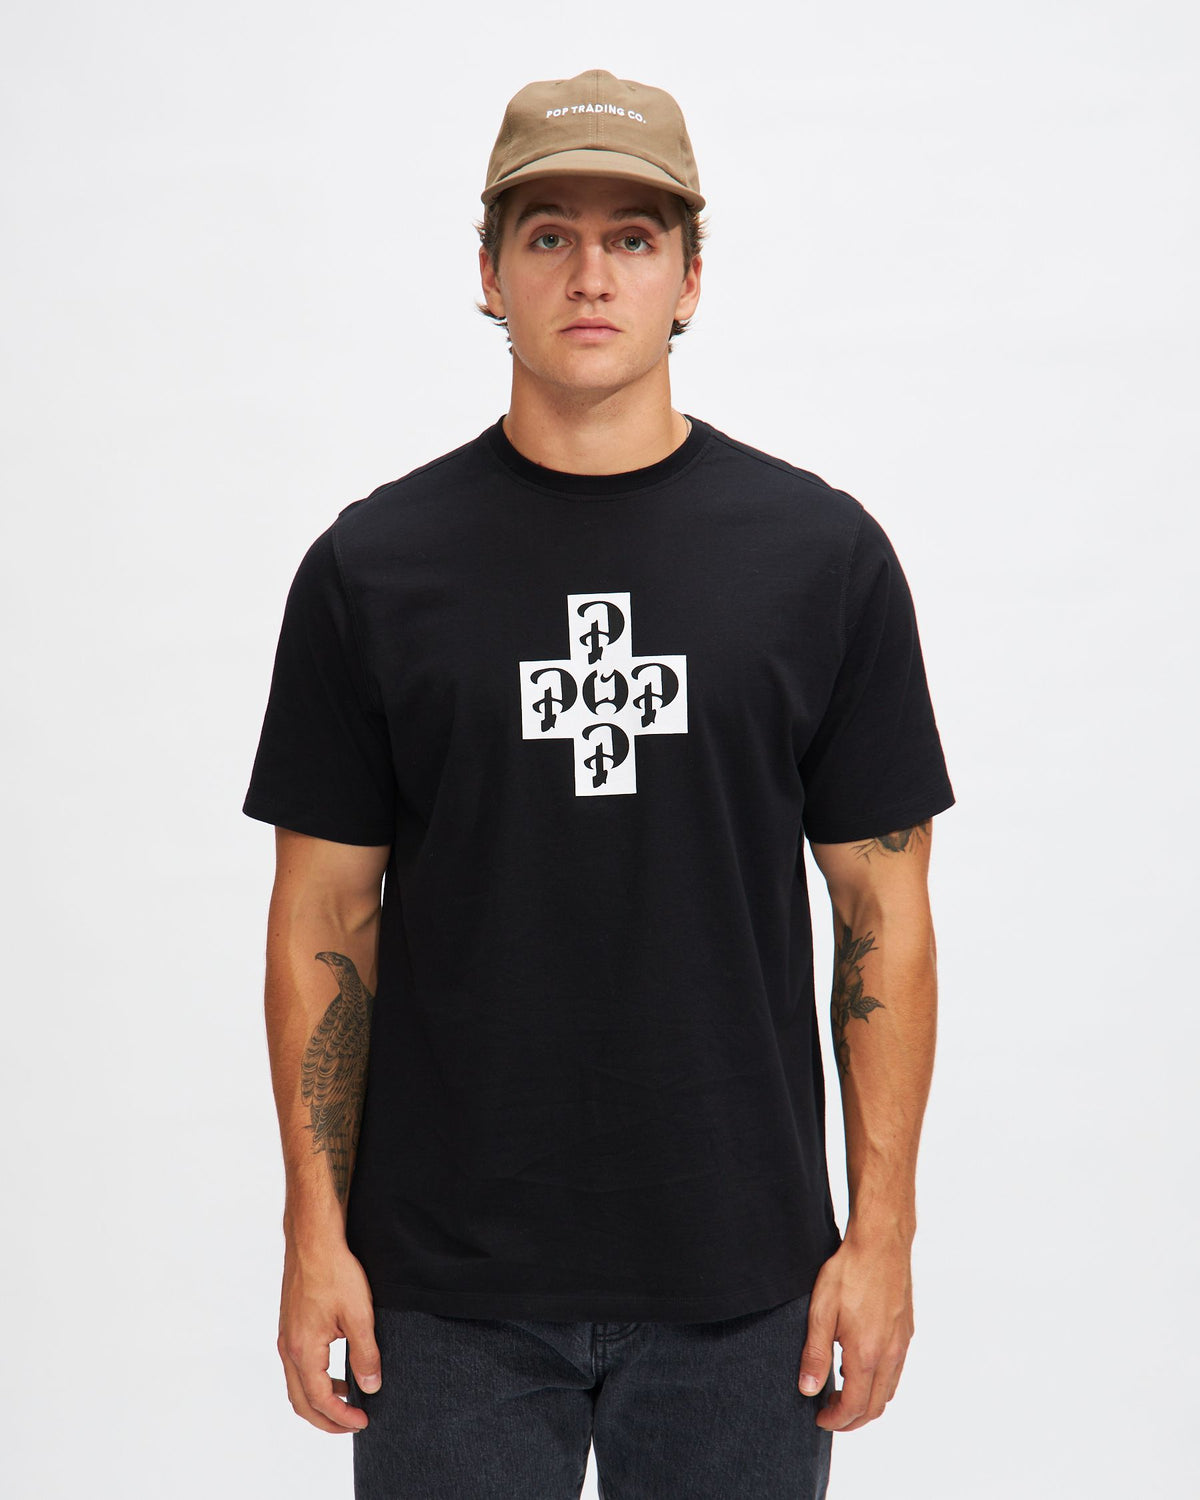 Godtown T-Shirt in Black